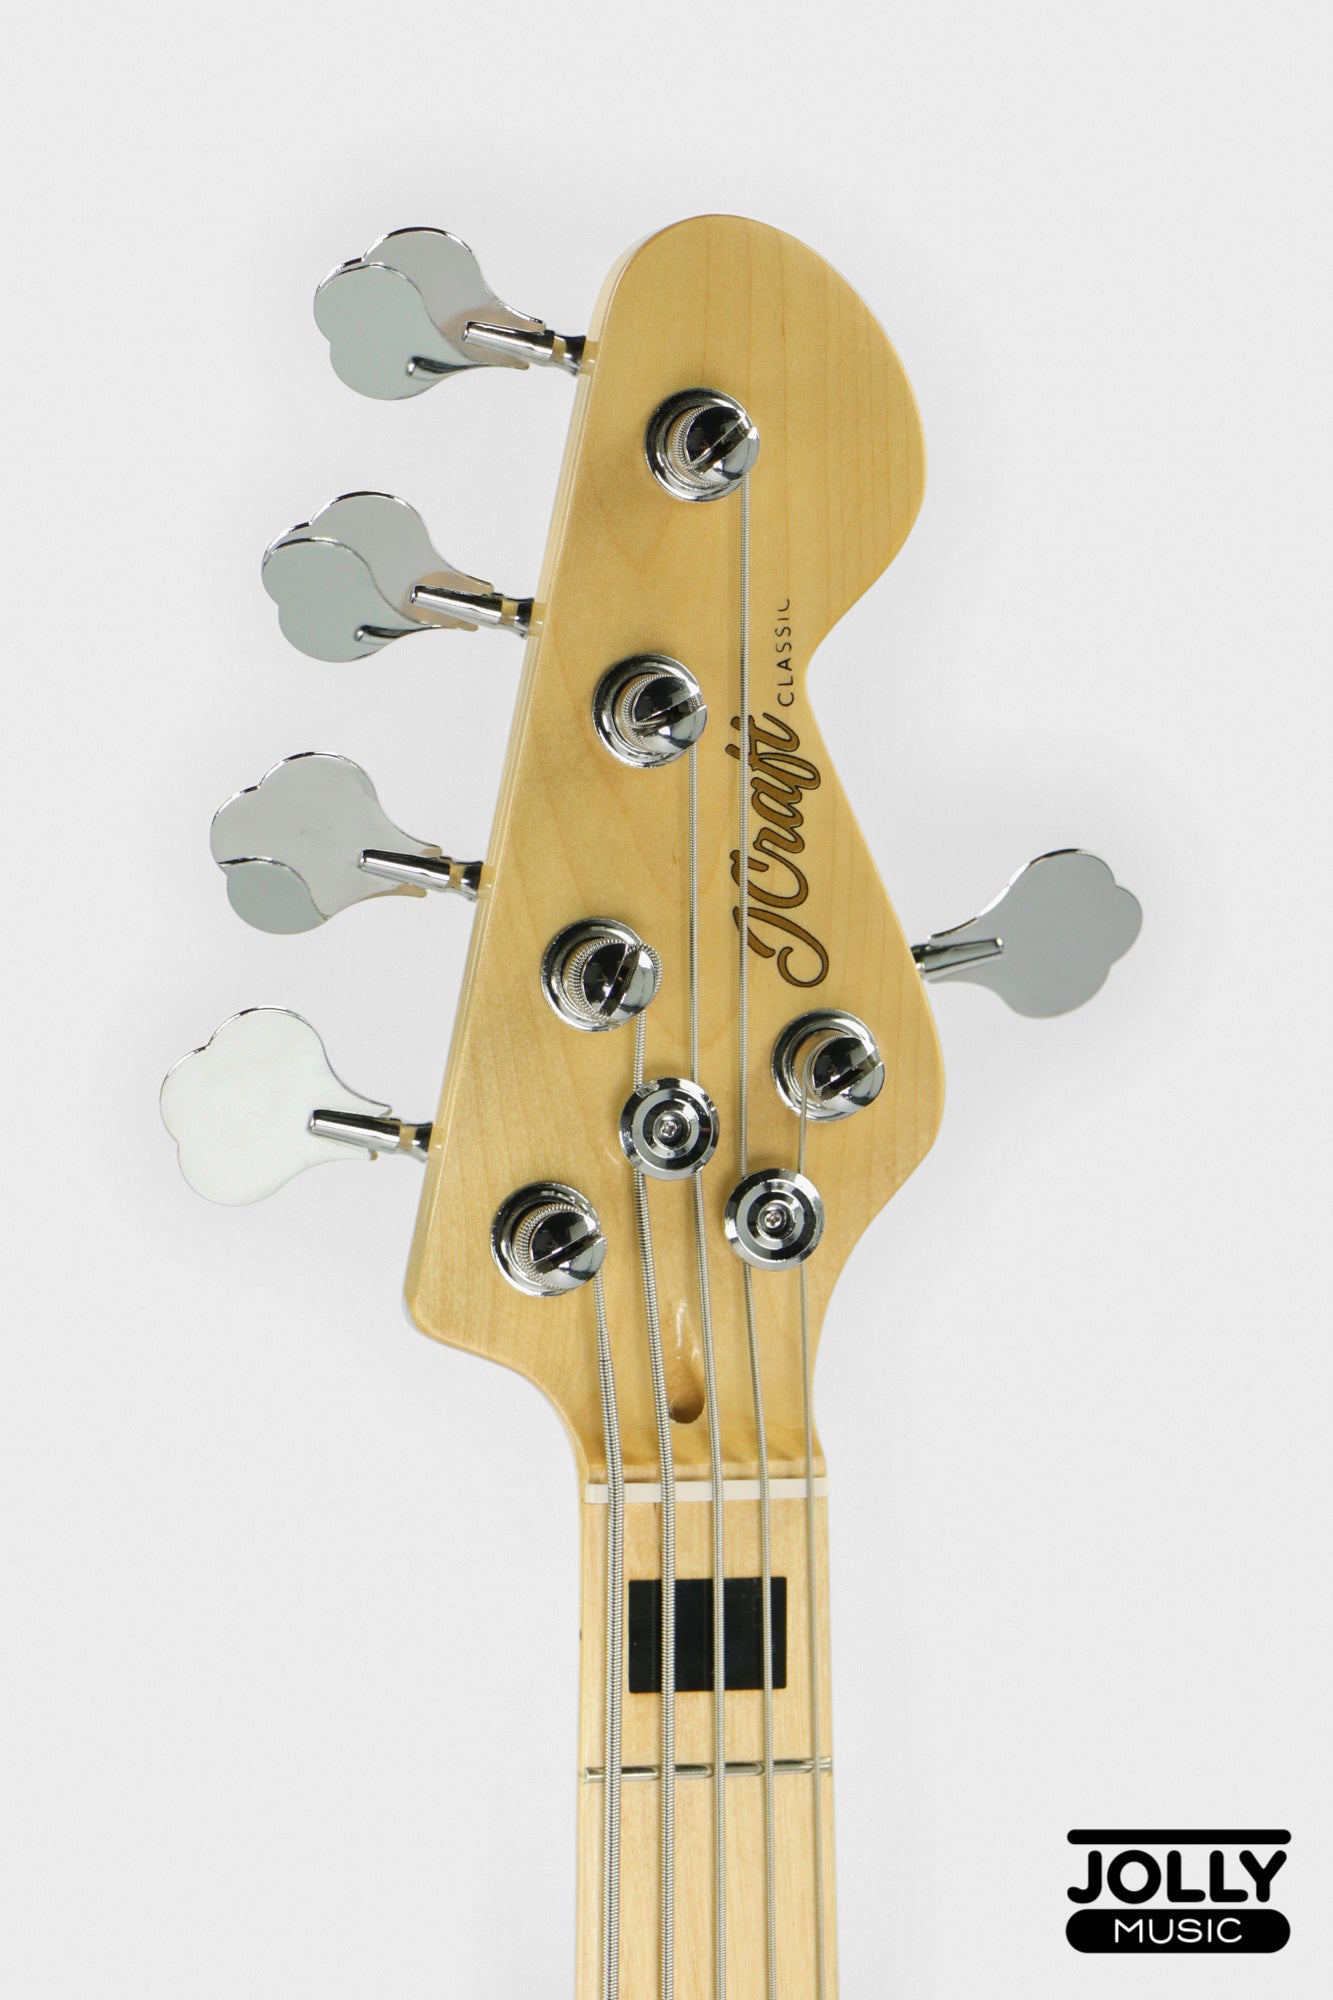 JCraft JB-1 J-Offset 5-String Bass Guitar with Gigbag - Black